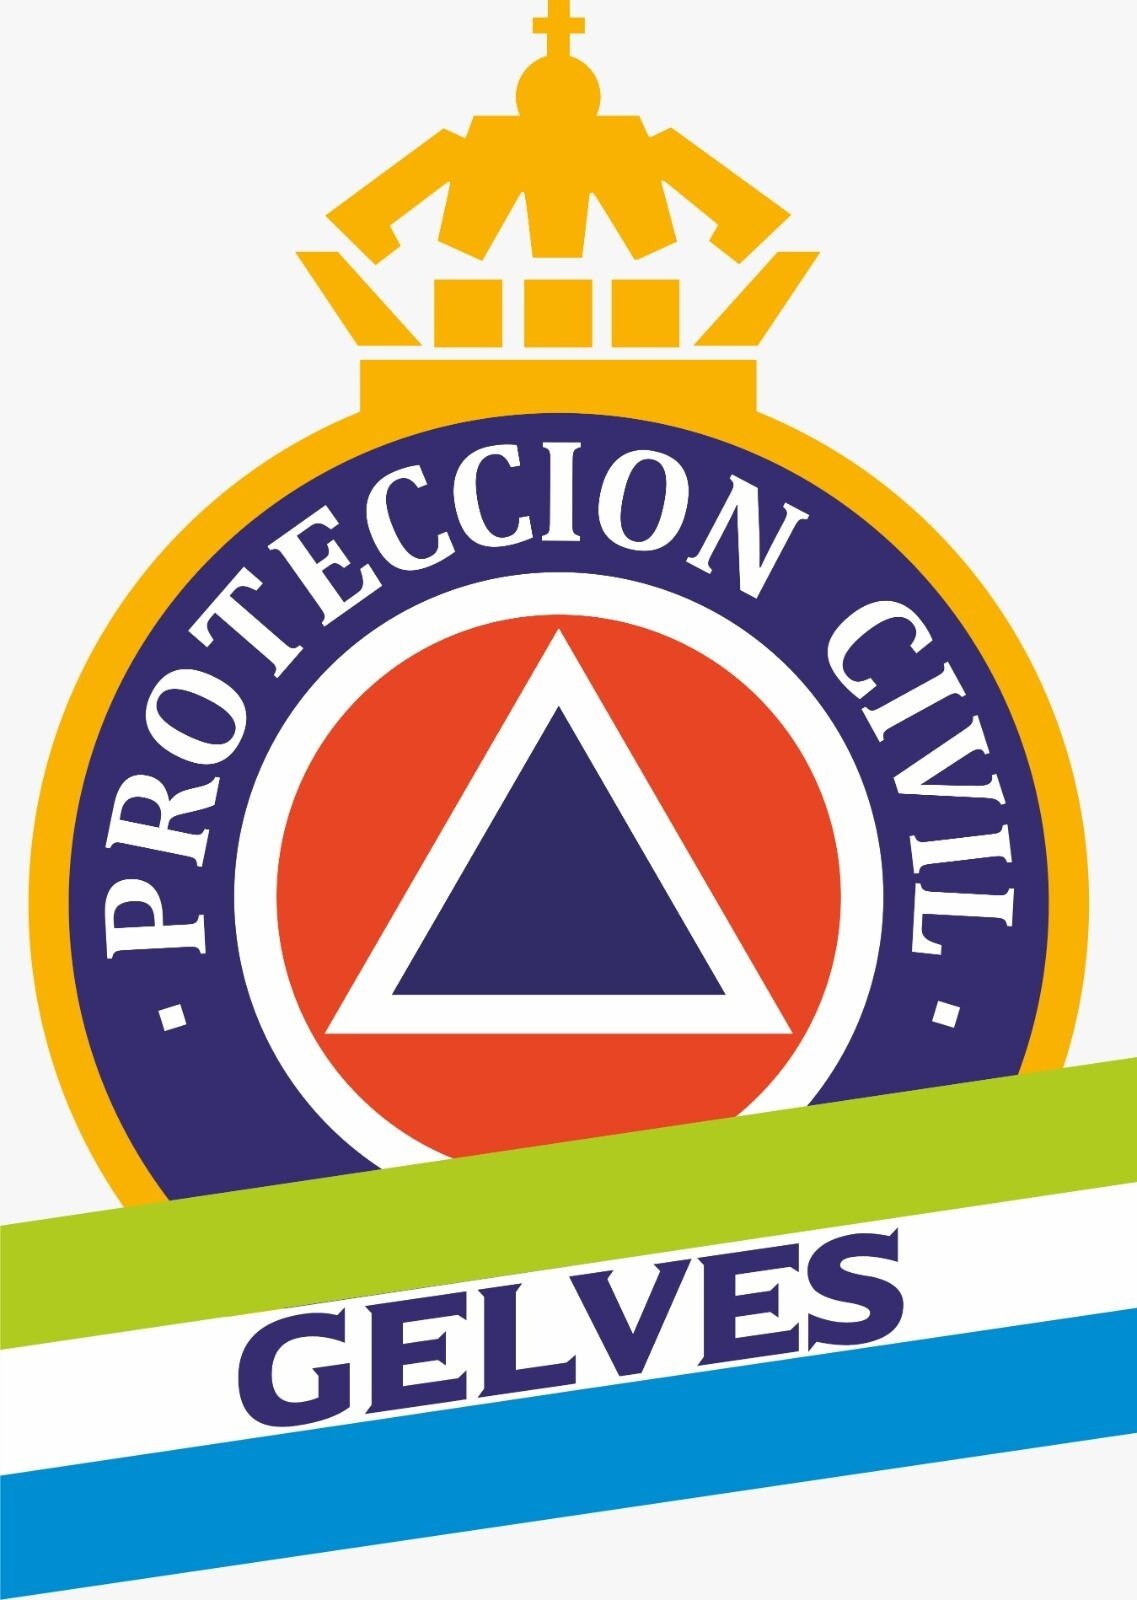 logo proteccion civil gelves